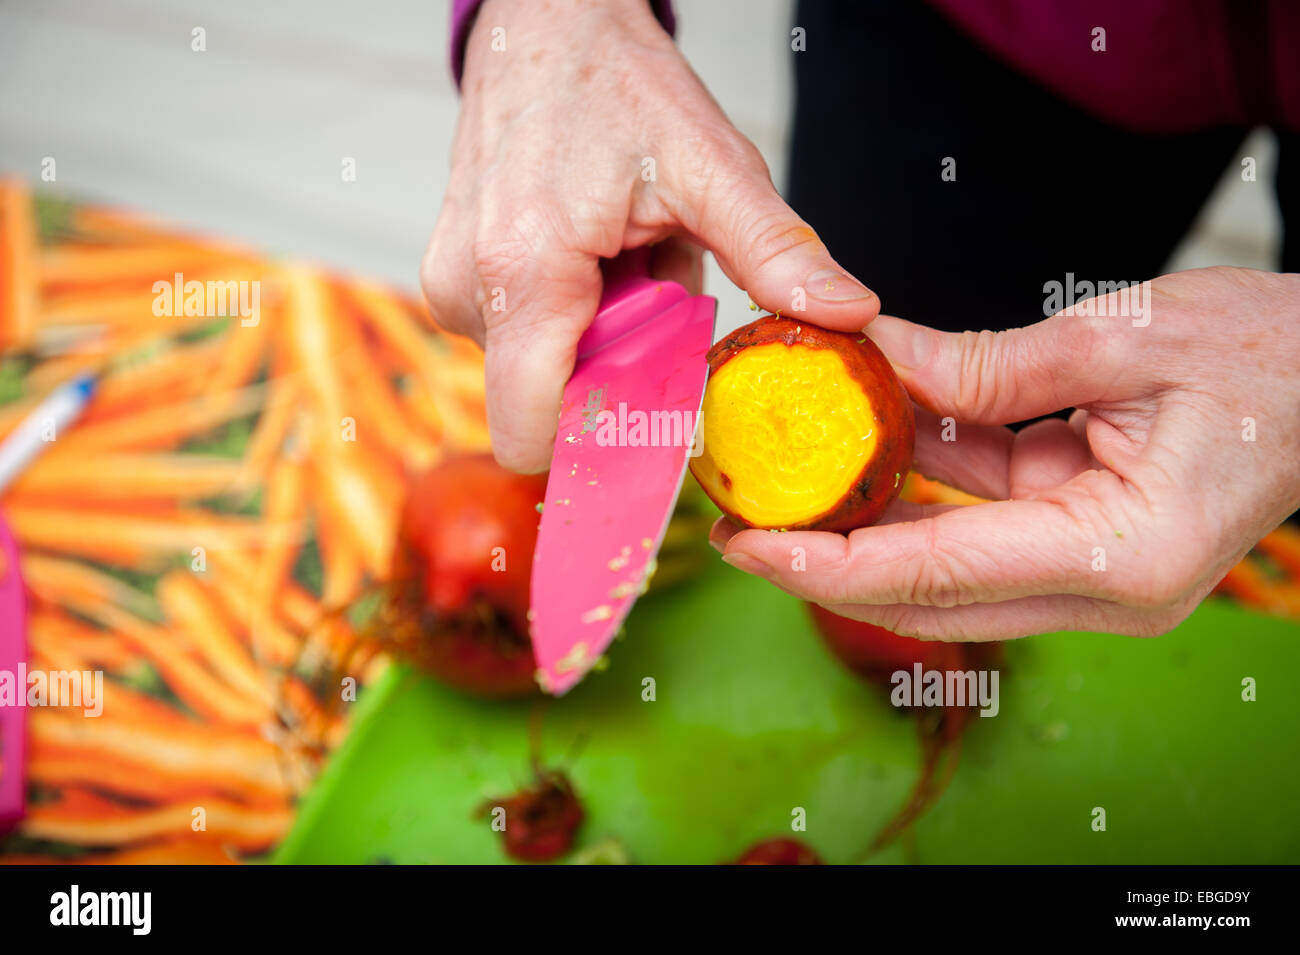 Cutting into a fresh turnip (Brassica rapa rapa) Stock Photo